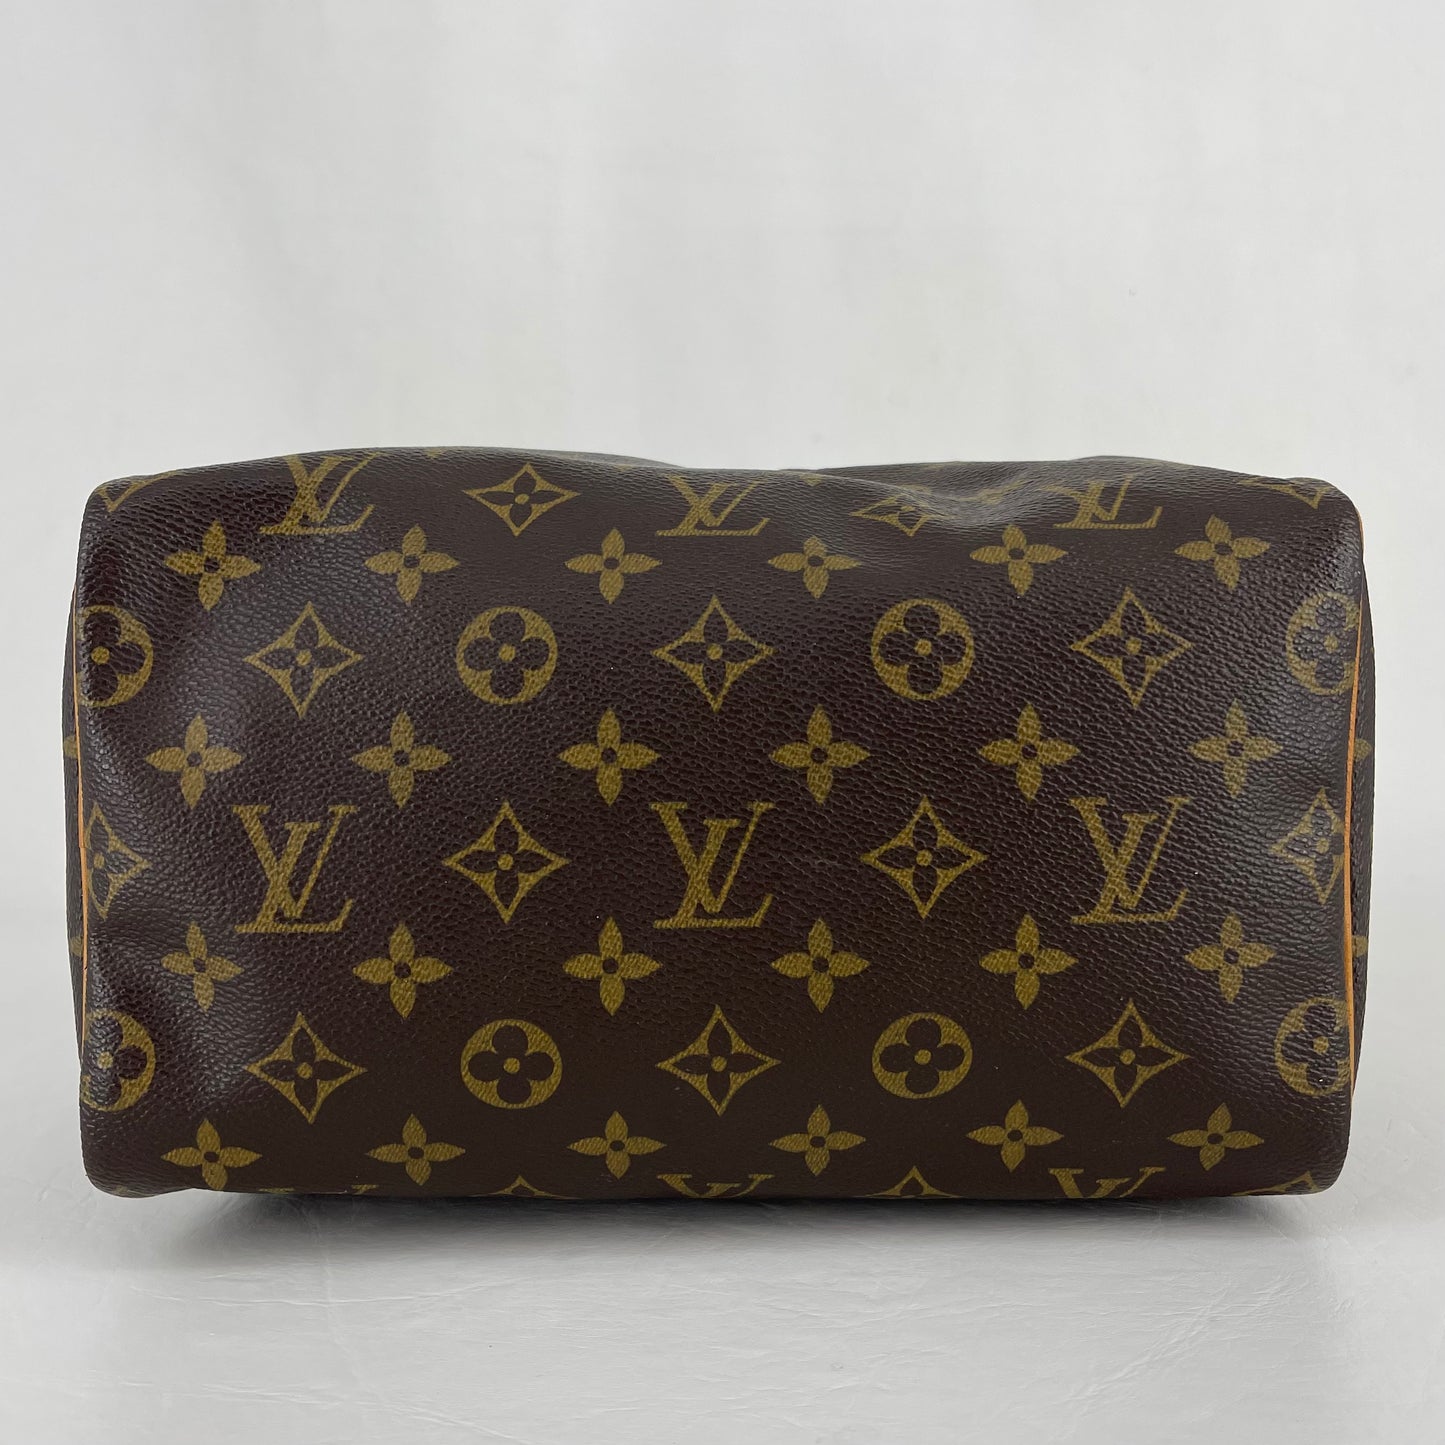 Authentic Louis Vuitton Monogram Speedy 25